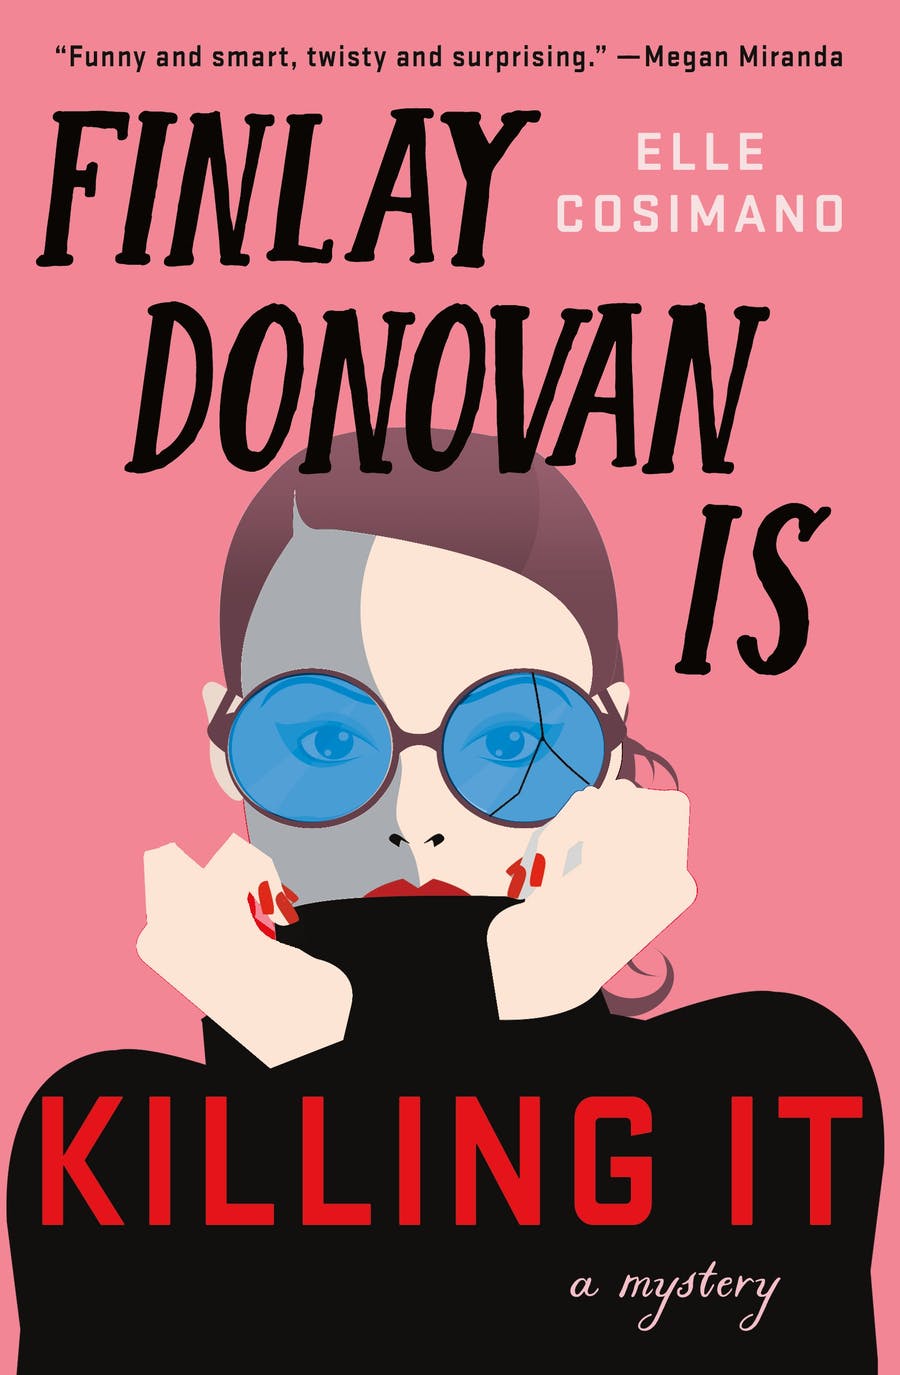 Book Cover: Finlay Donovan by Elle Cosimano